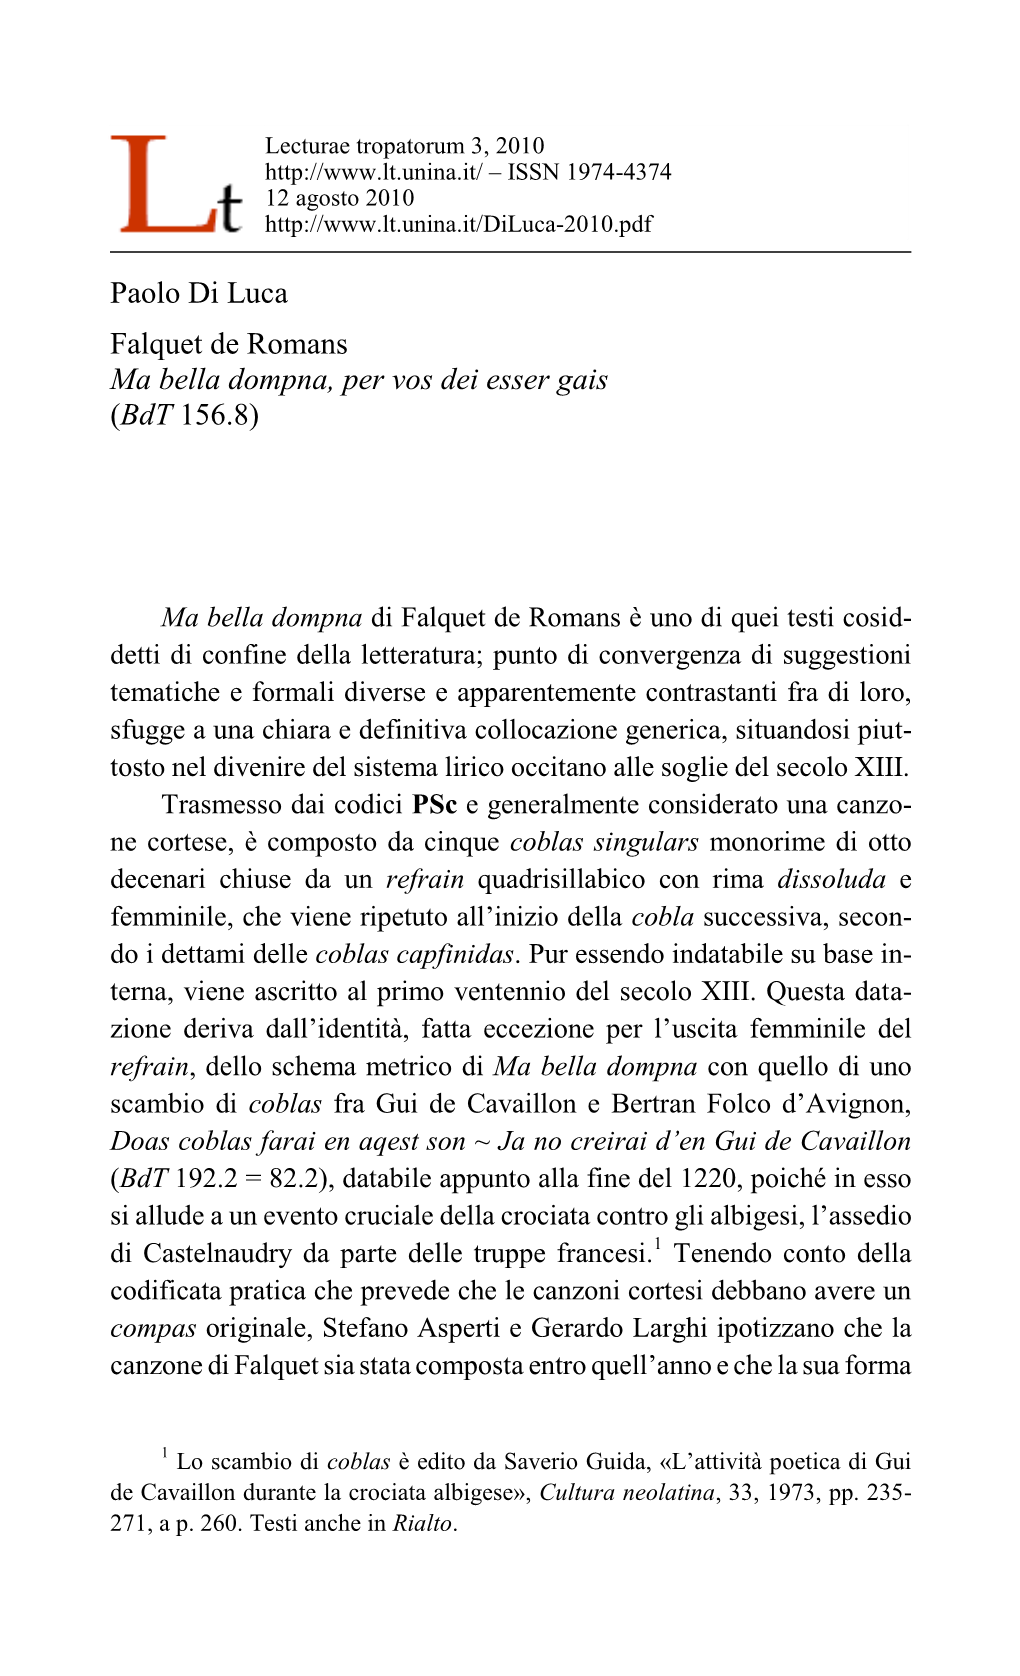 Paolo Di Luca Falquet De Romans Ma Bella Dompna, Per Vos Dei Esser Gais (Bdt 156.8)